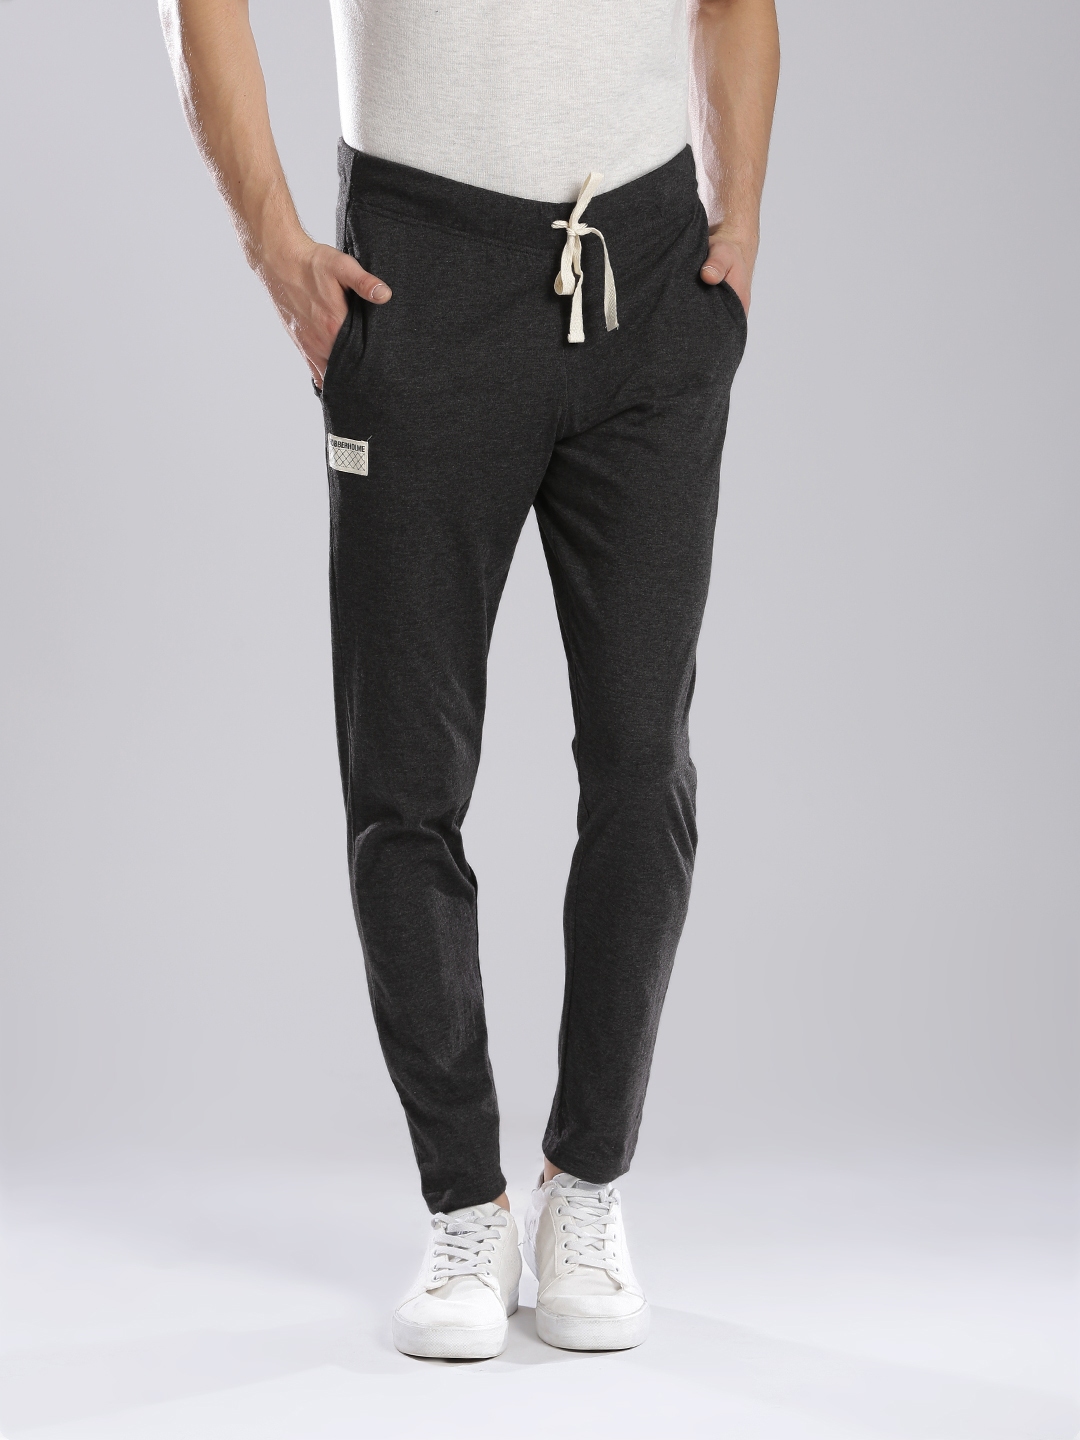 Buy Hubberholme Charcoal Grey Track Pants - Track Pants for Men 1088890 ...